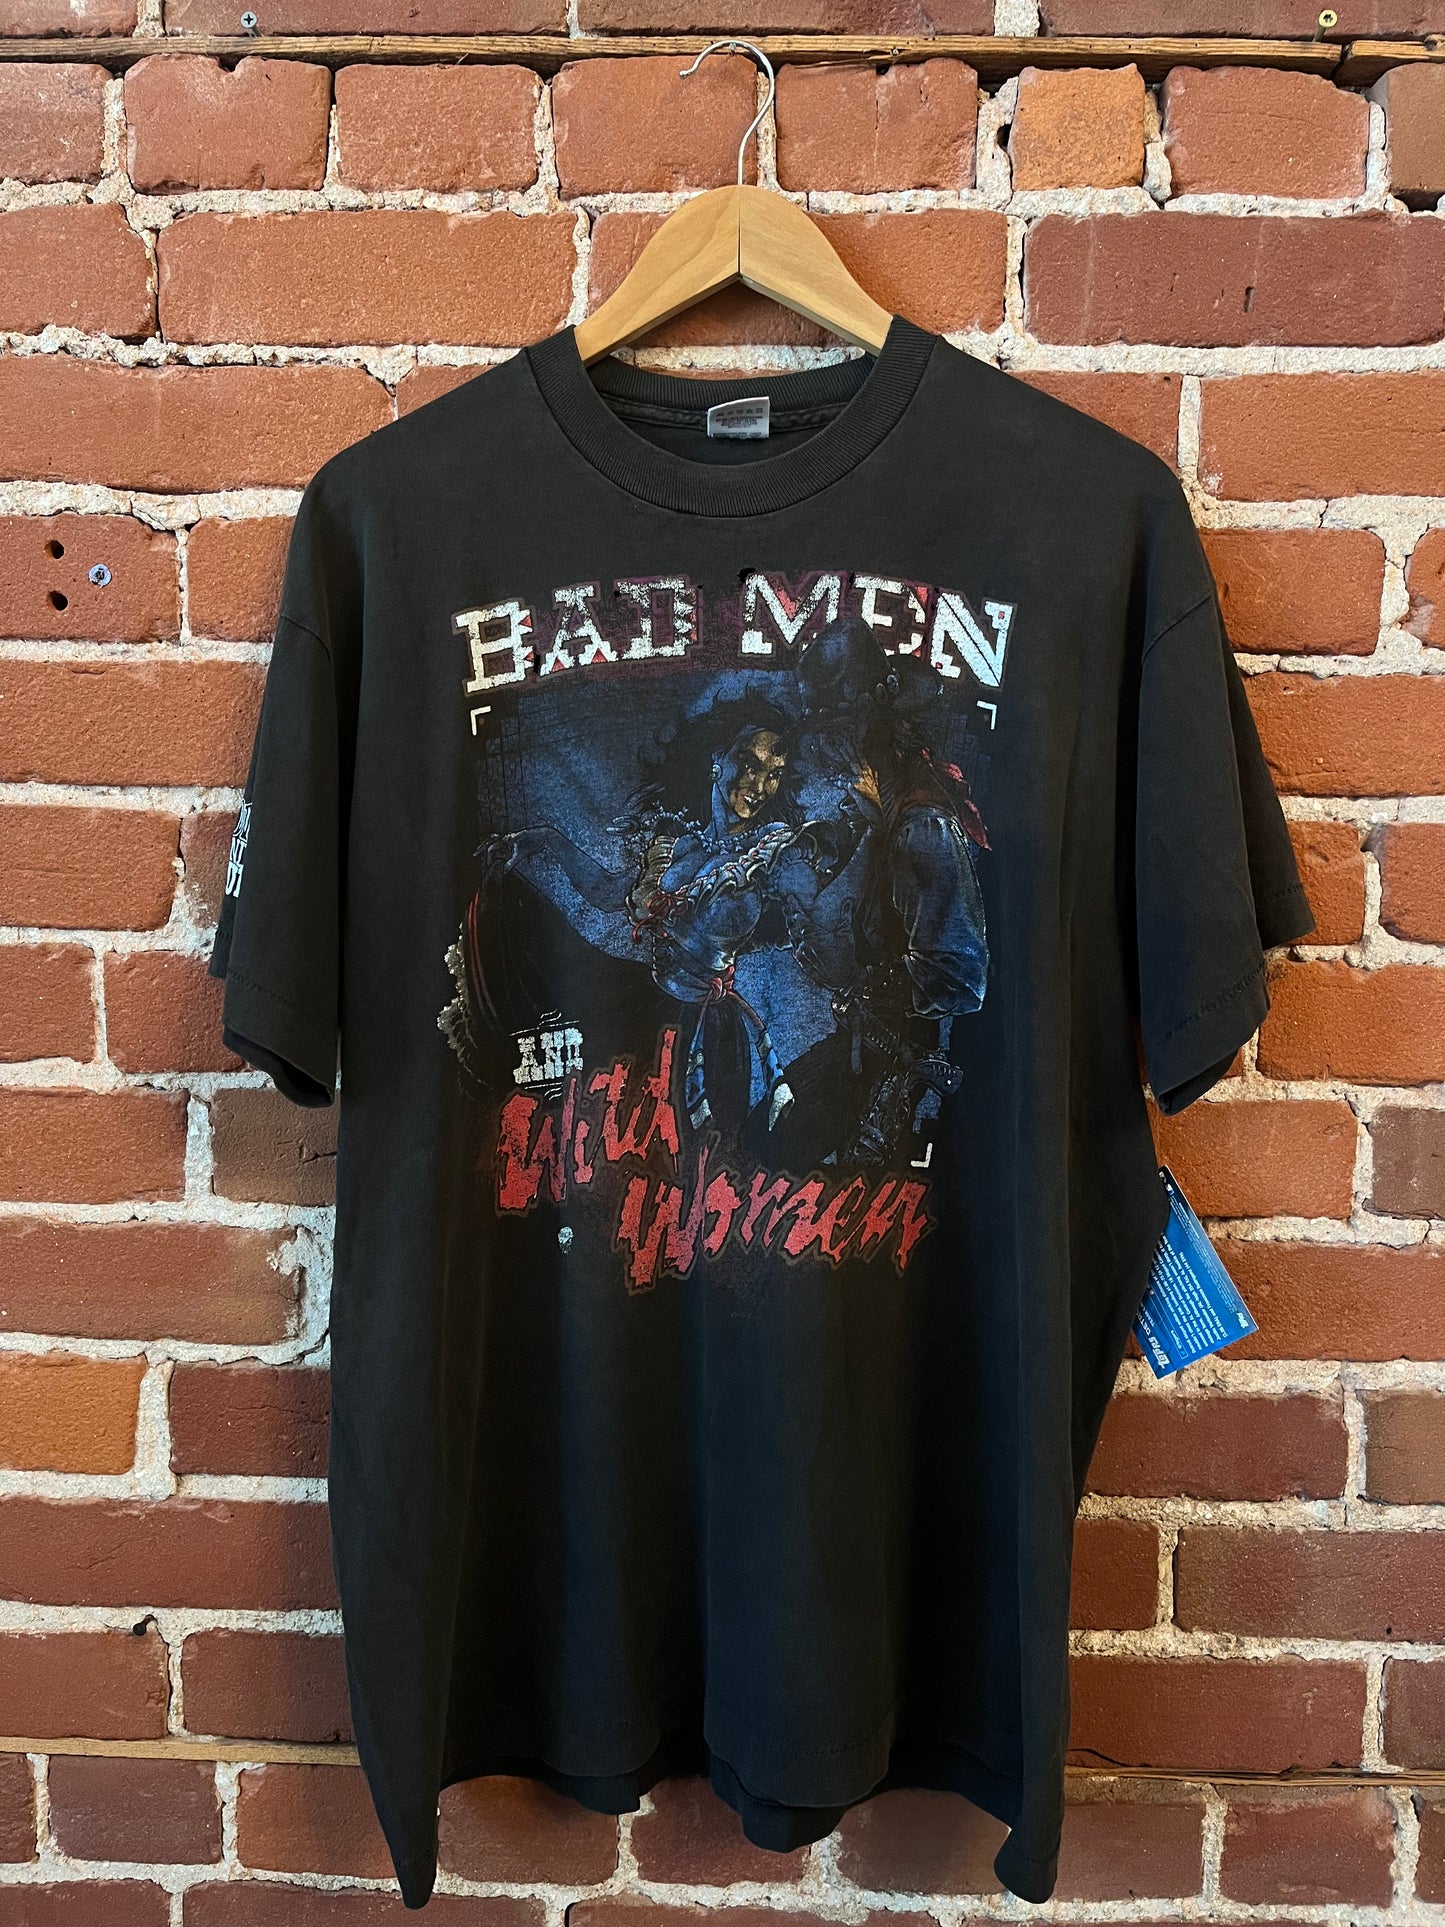 Bad men and Wild Women 90s